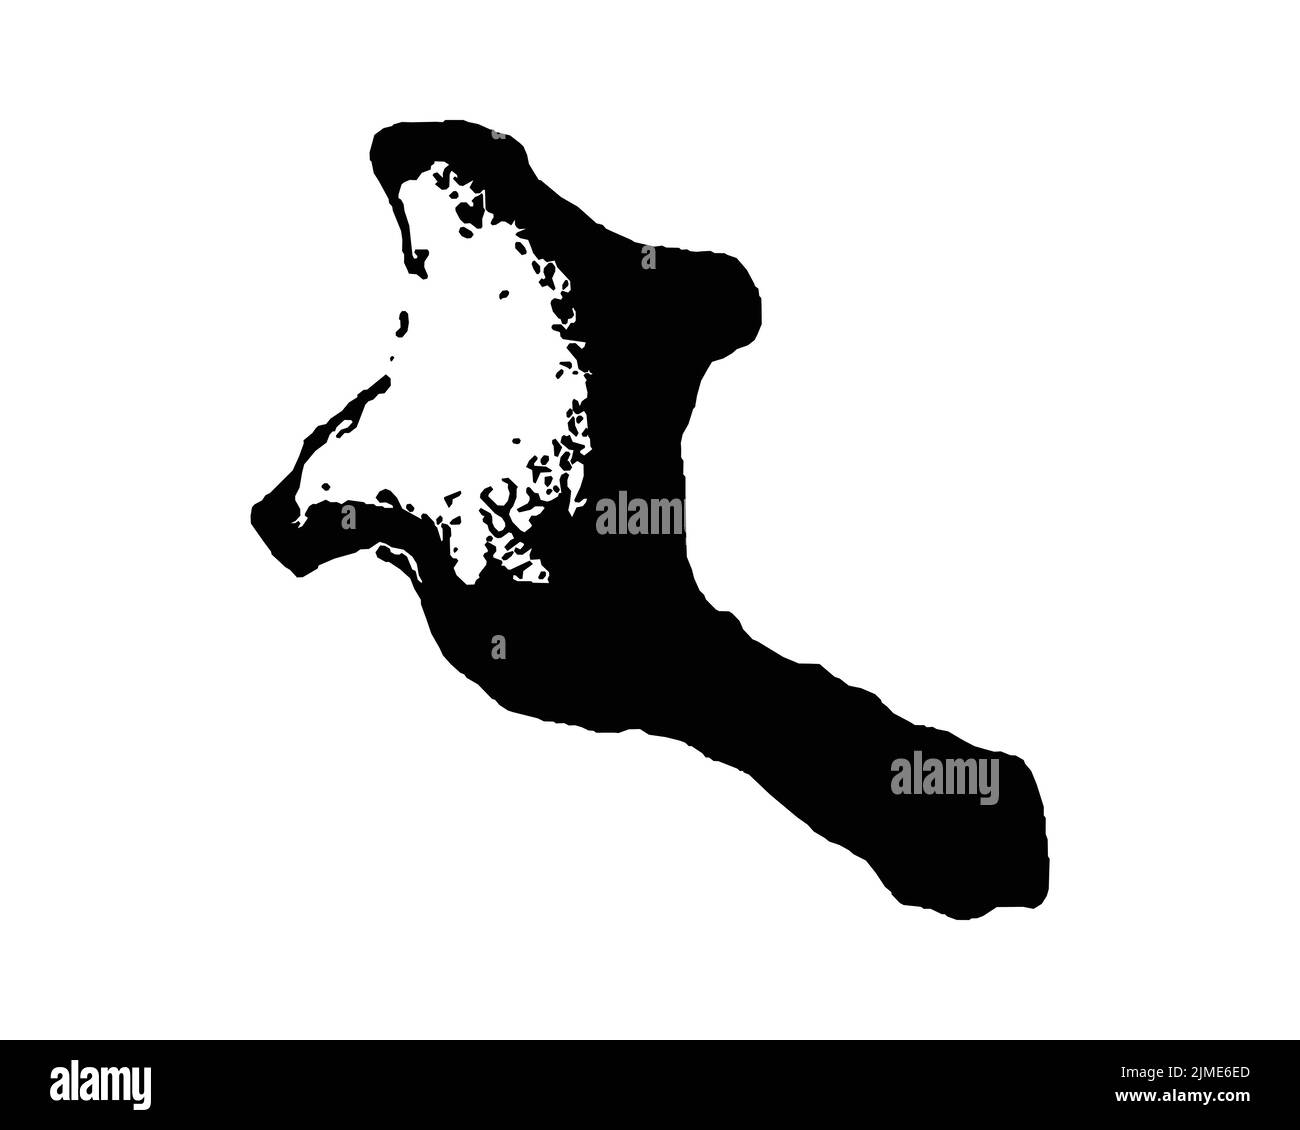 Kiribati Map. I-Kiribati Country Map. Black and White National Nation Outline Geography Border Boundary Shape Territory Vector Illustration EPS Clipar Stock Vector